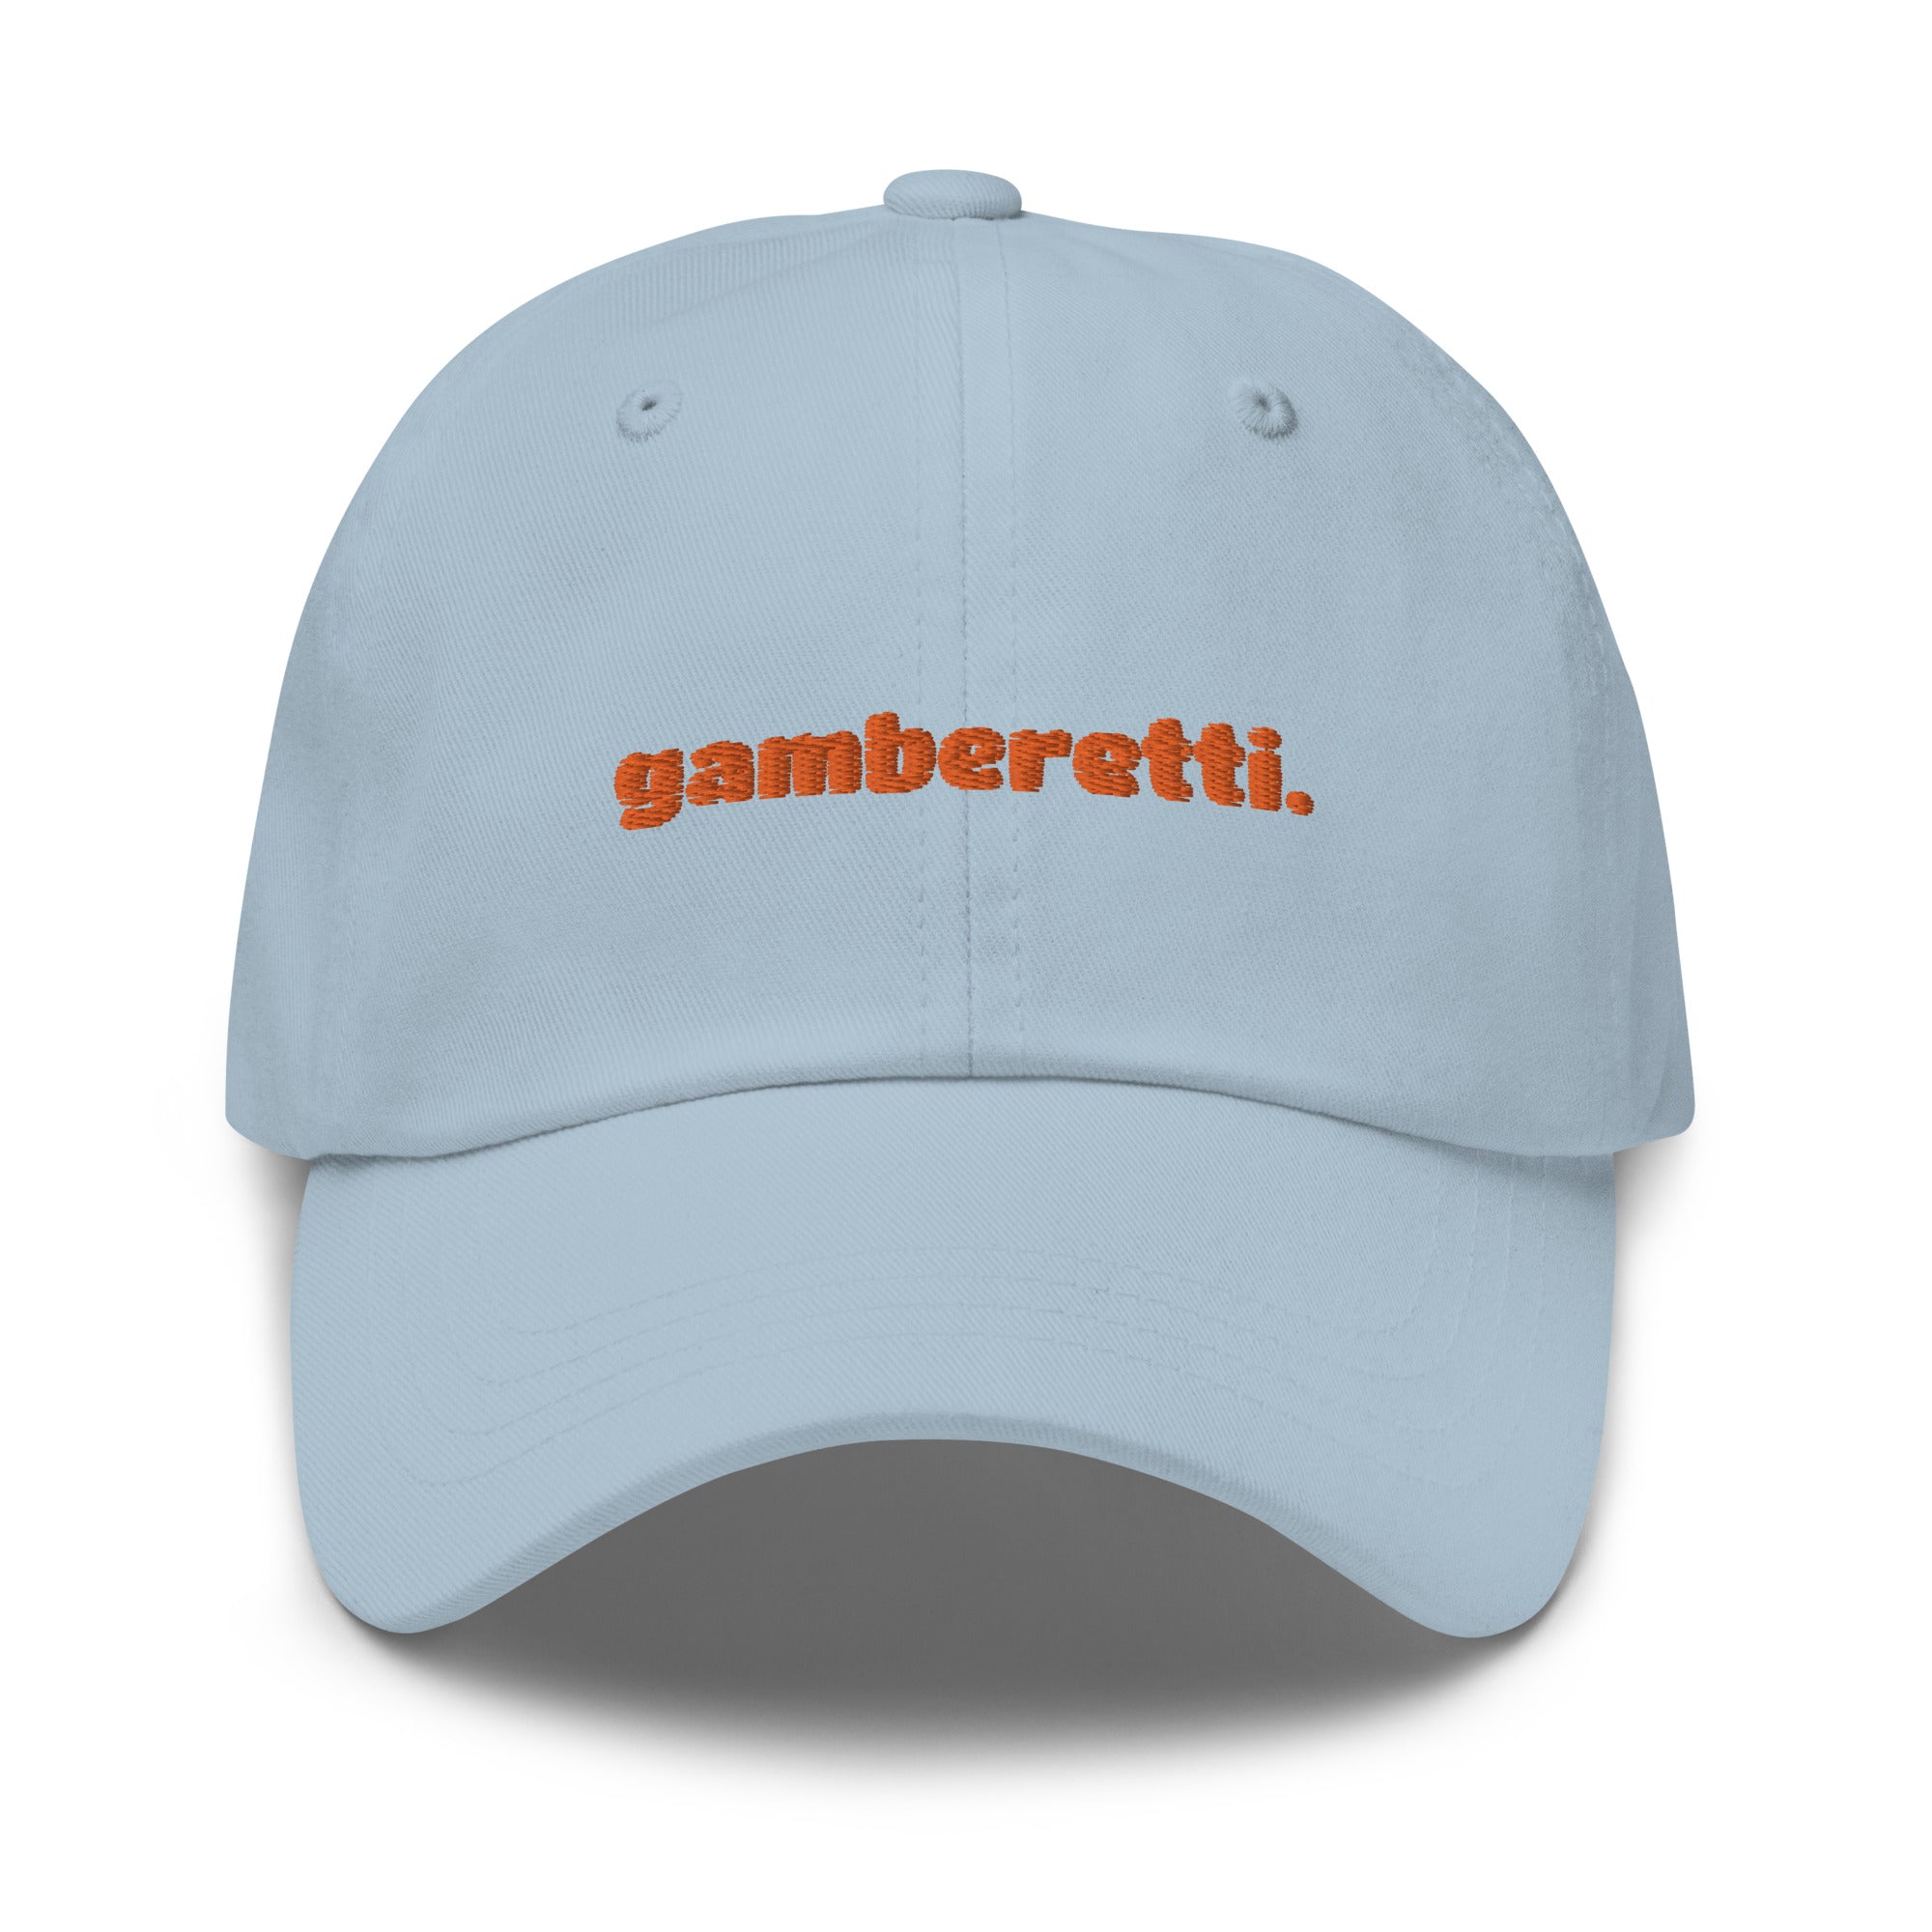 Gamberetti - Dad hat